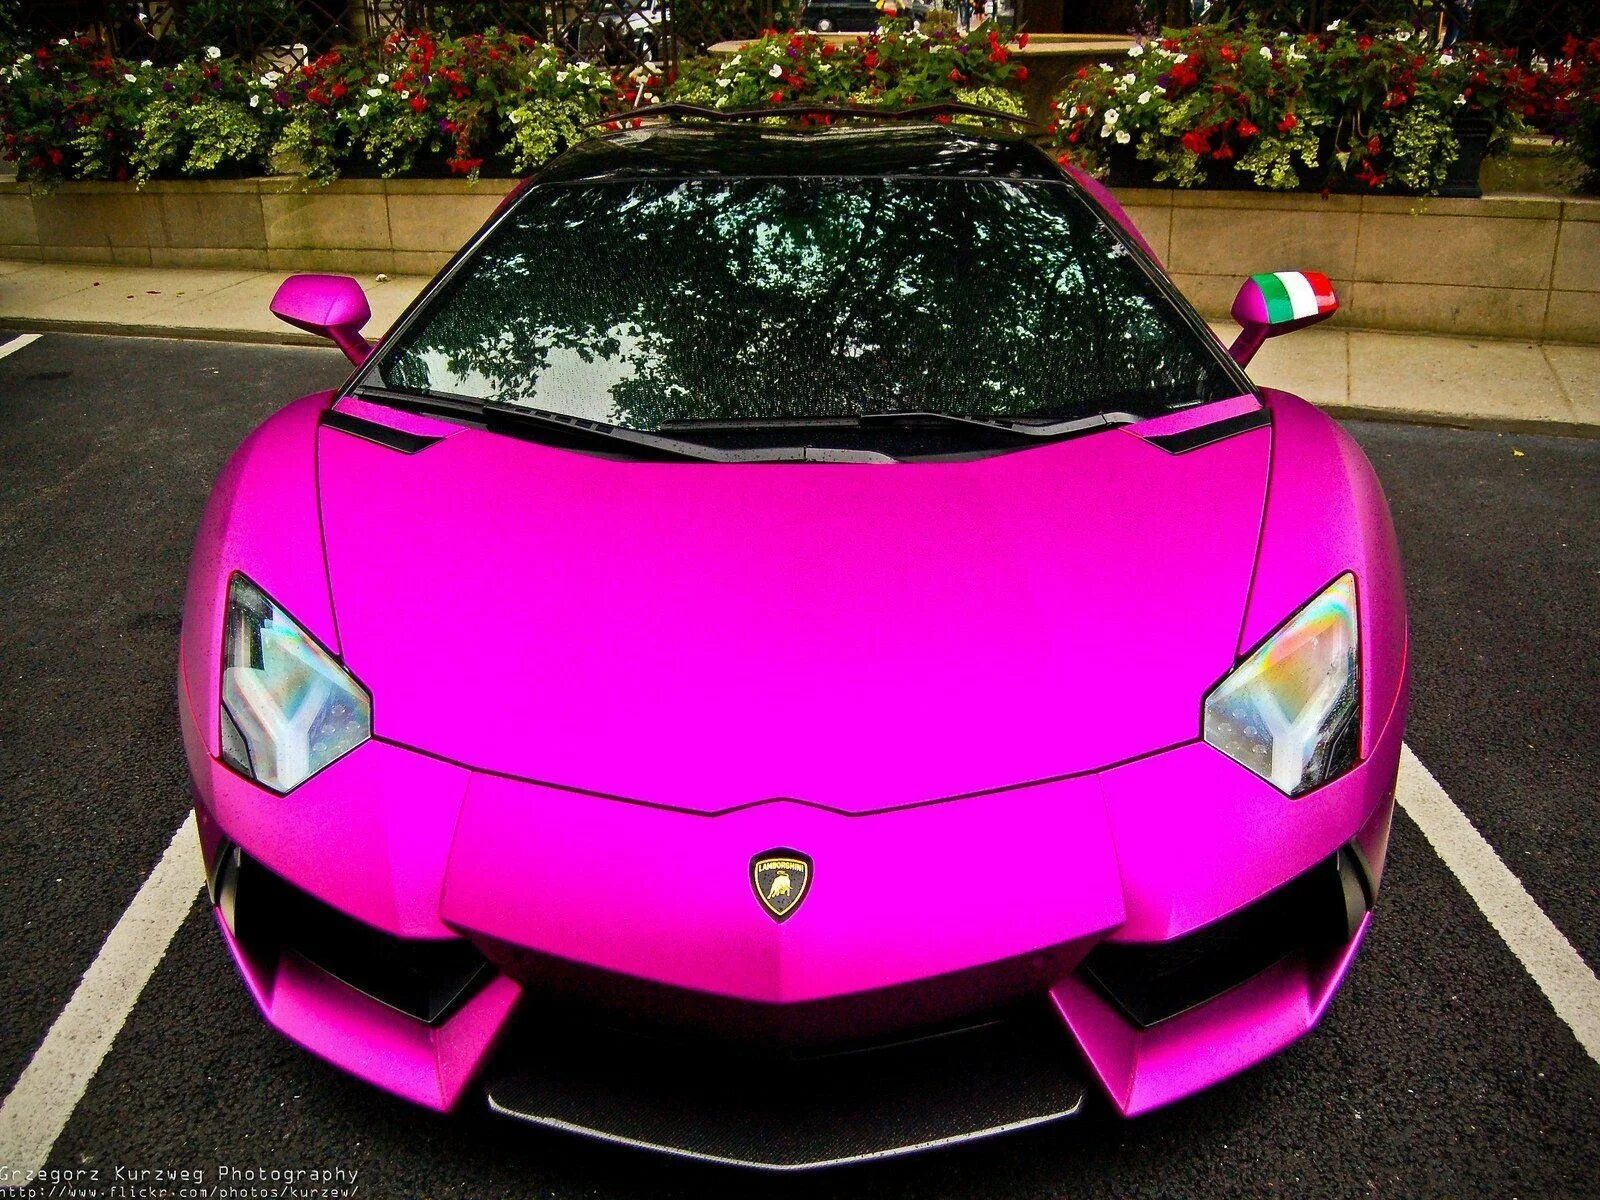 Lamborghini Aventador lp700-4 розовая. Пурпл Ламборджини. Lamborghini Aventador lp700-4 фиолетовый. Lamborghini Aventador lp700 розовый.